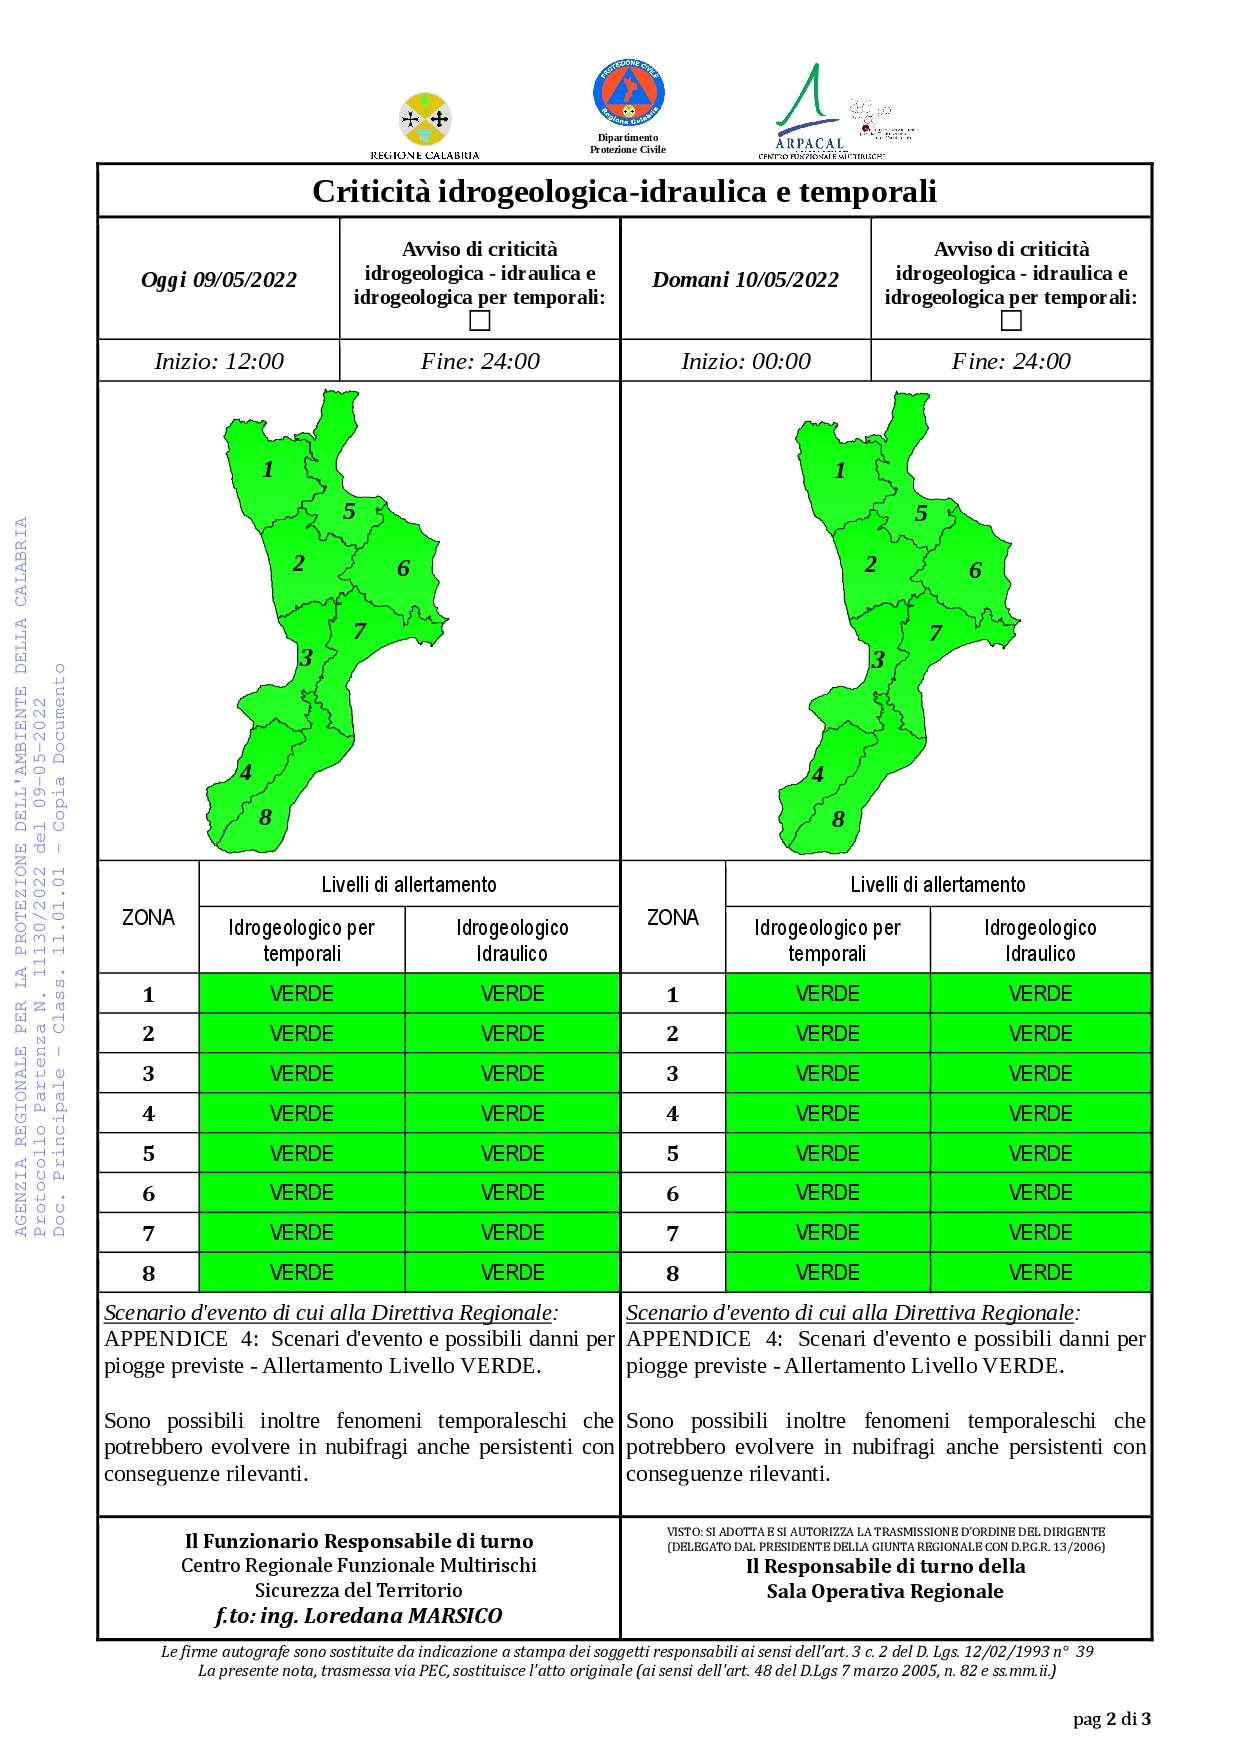 Criticità idrogeologica-idraulica e temporali in Calabria 09-05-2022